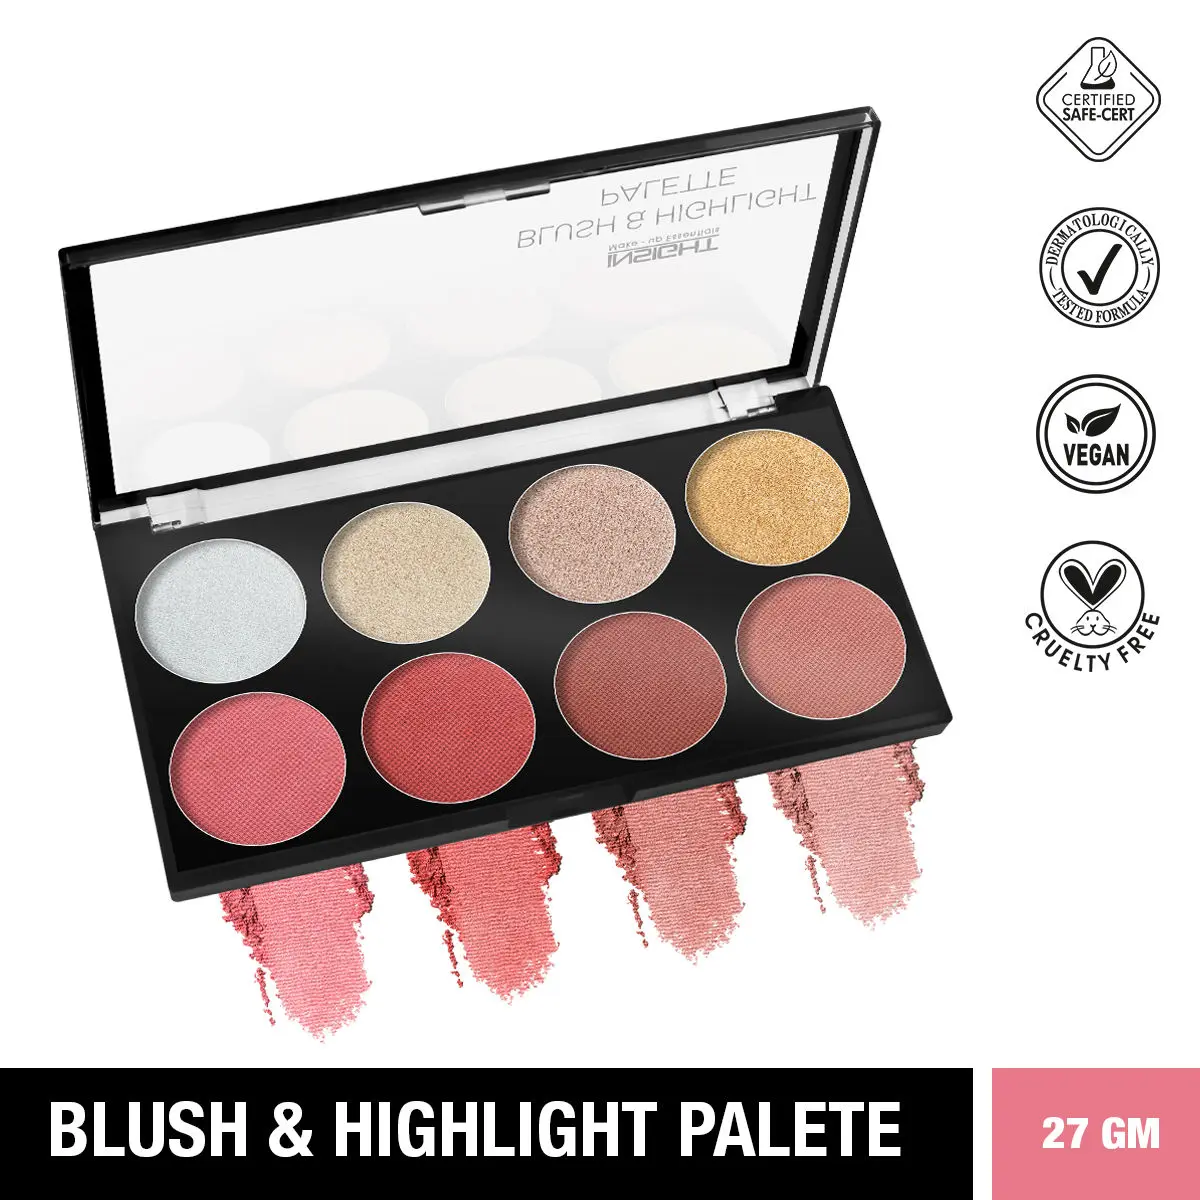 Insight Cosmetics Blush & Highlight Palette 27 gm